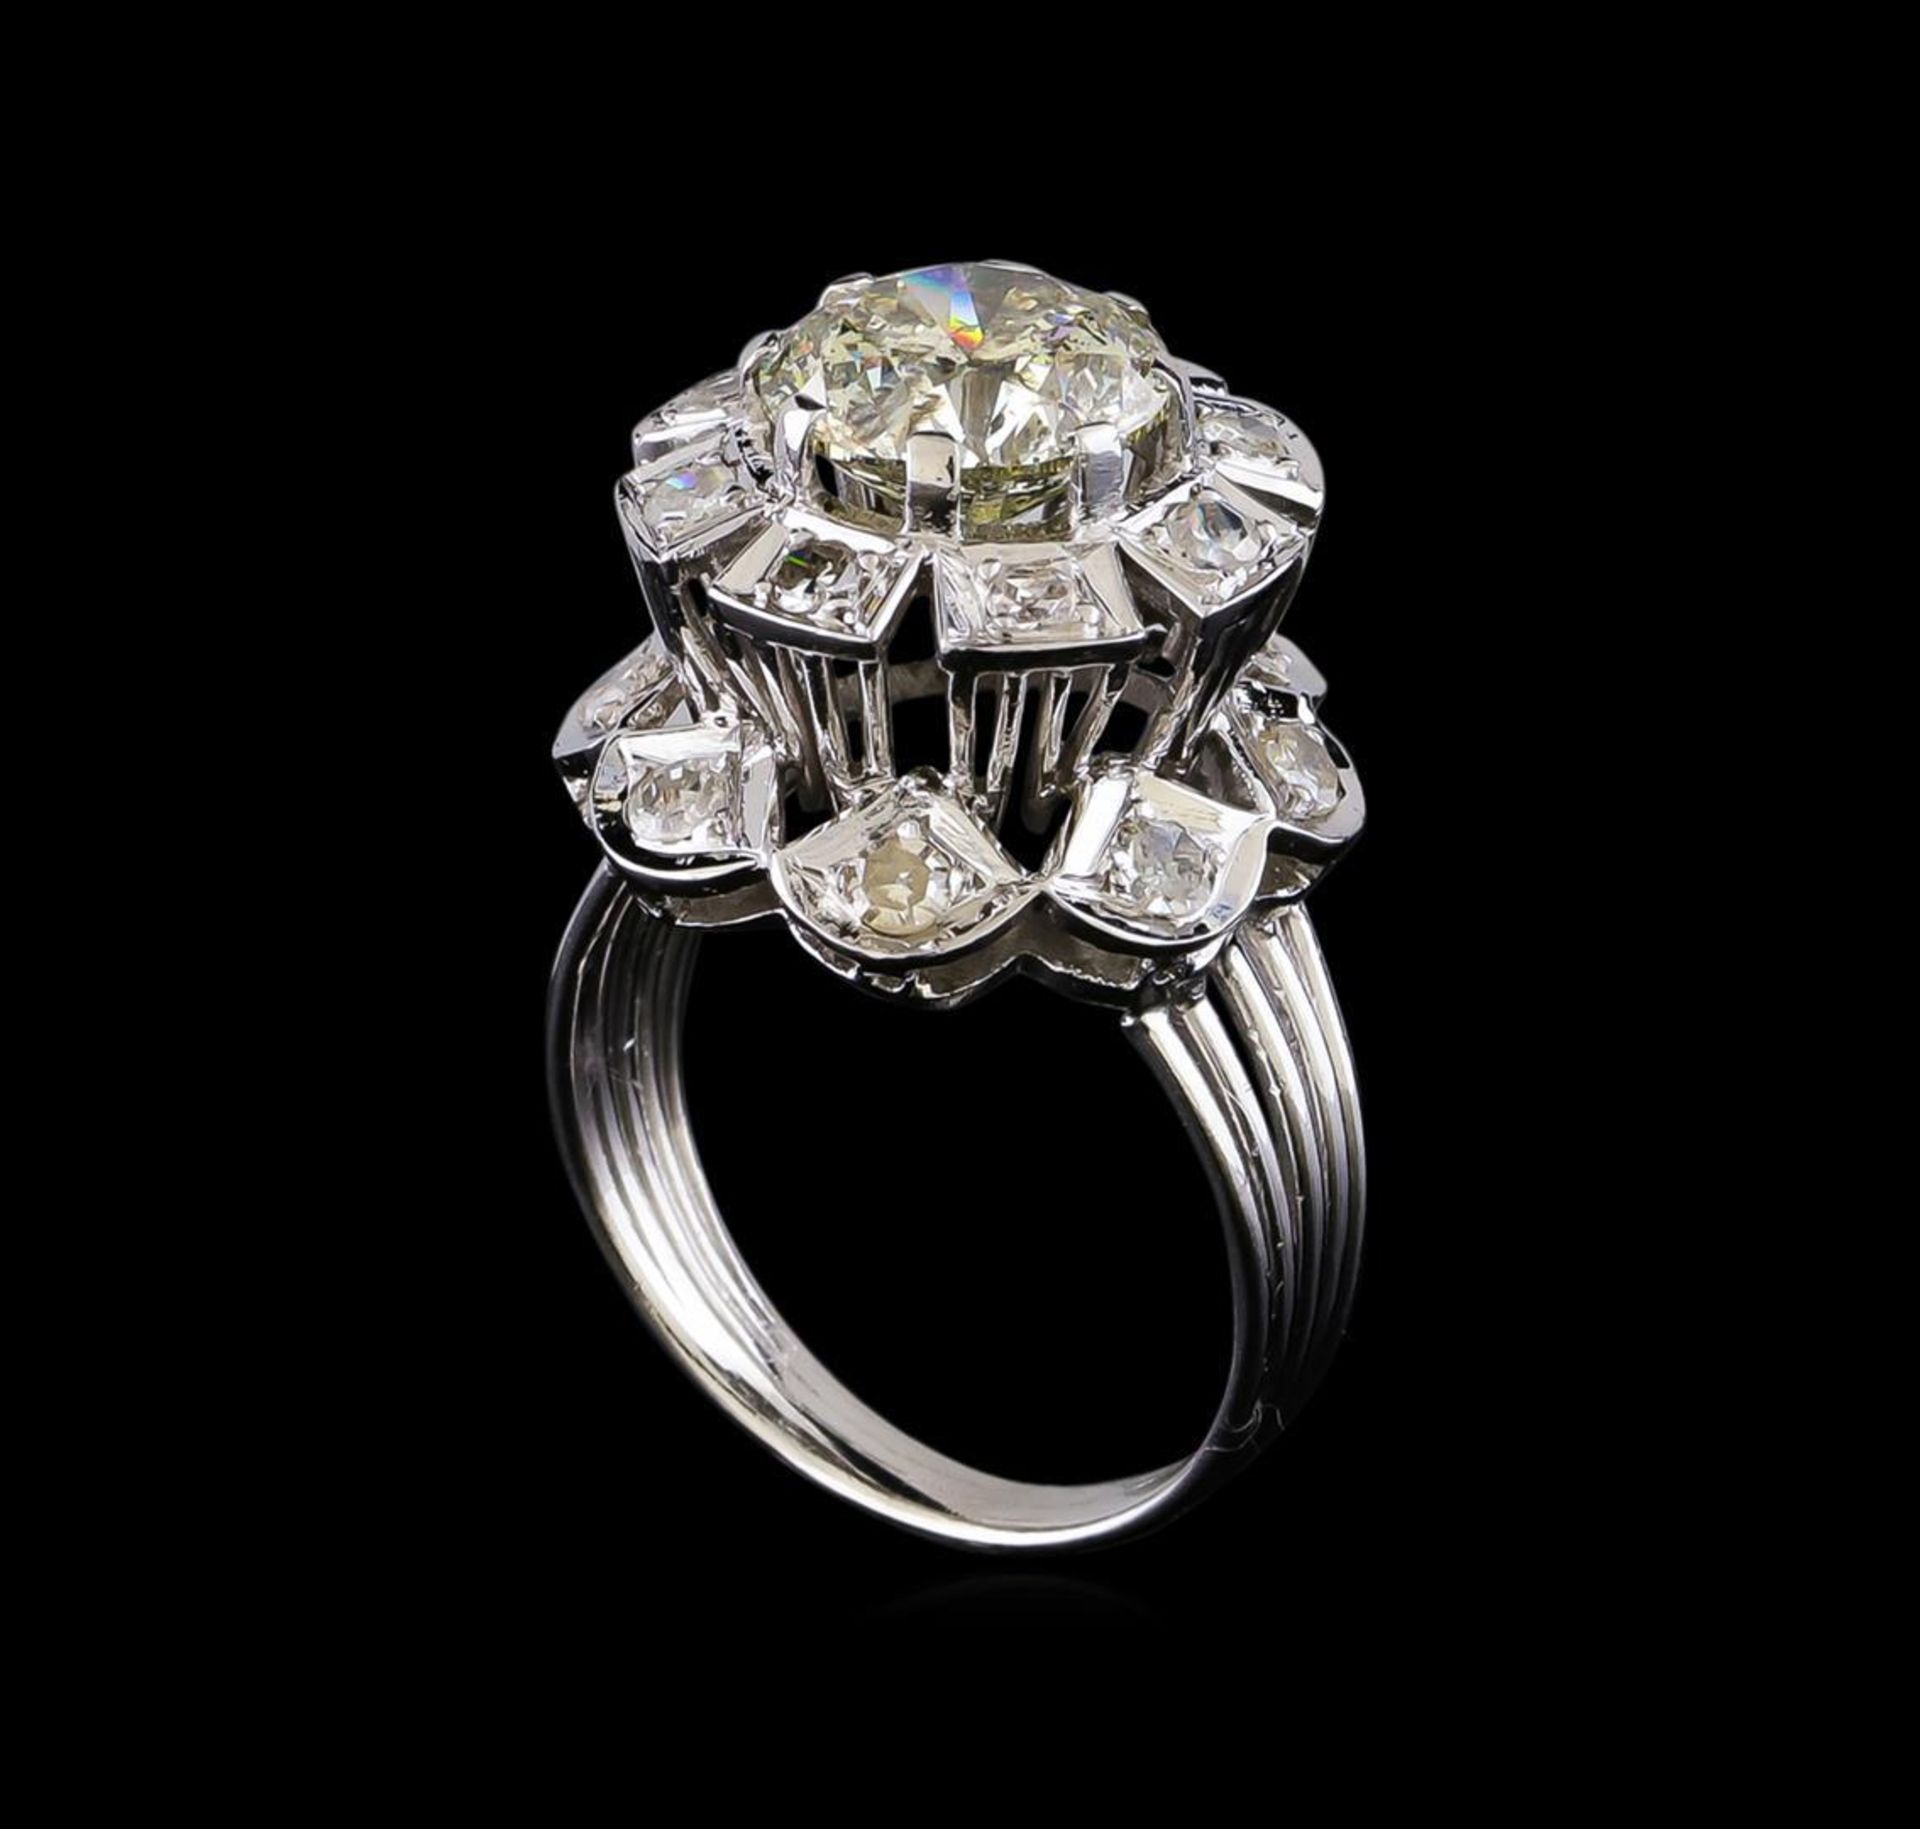 3.65 ctw Diamond Ring - 18KT White Gold - Image 4 of 5